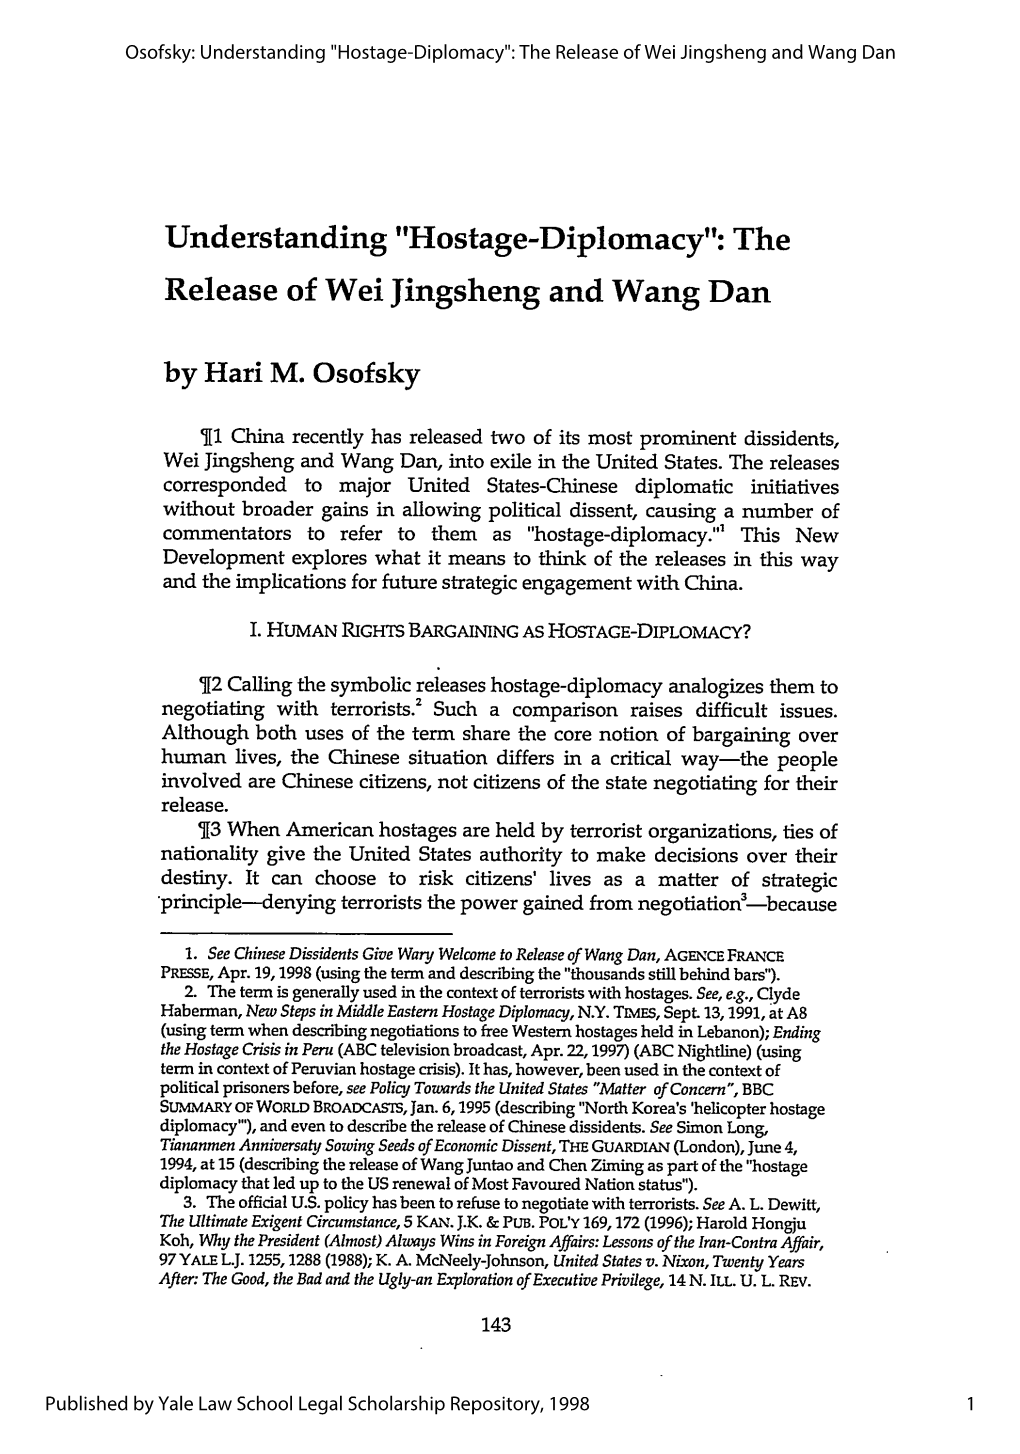 Hostage-Diplomacy": the Release of Wei Jingsheng and Wang Dan